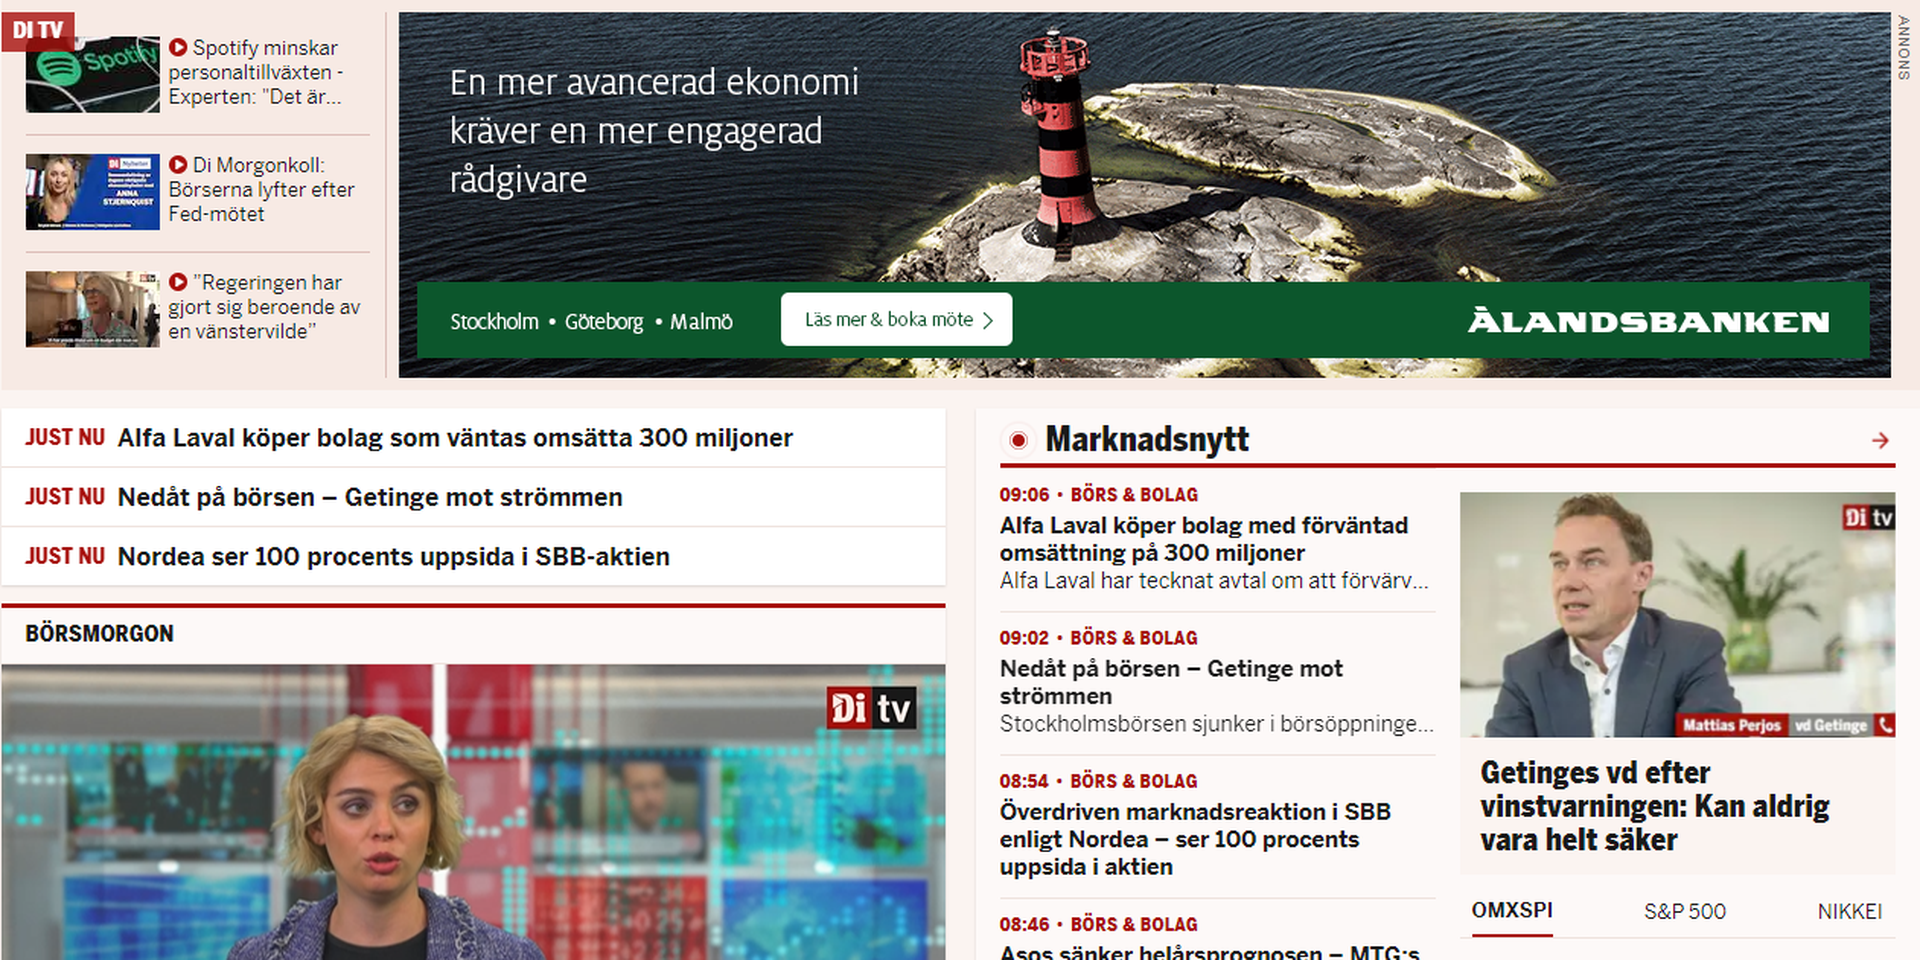 Dagens Industrie online.PNG